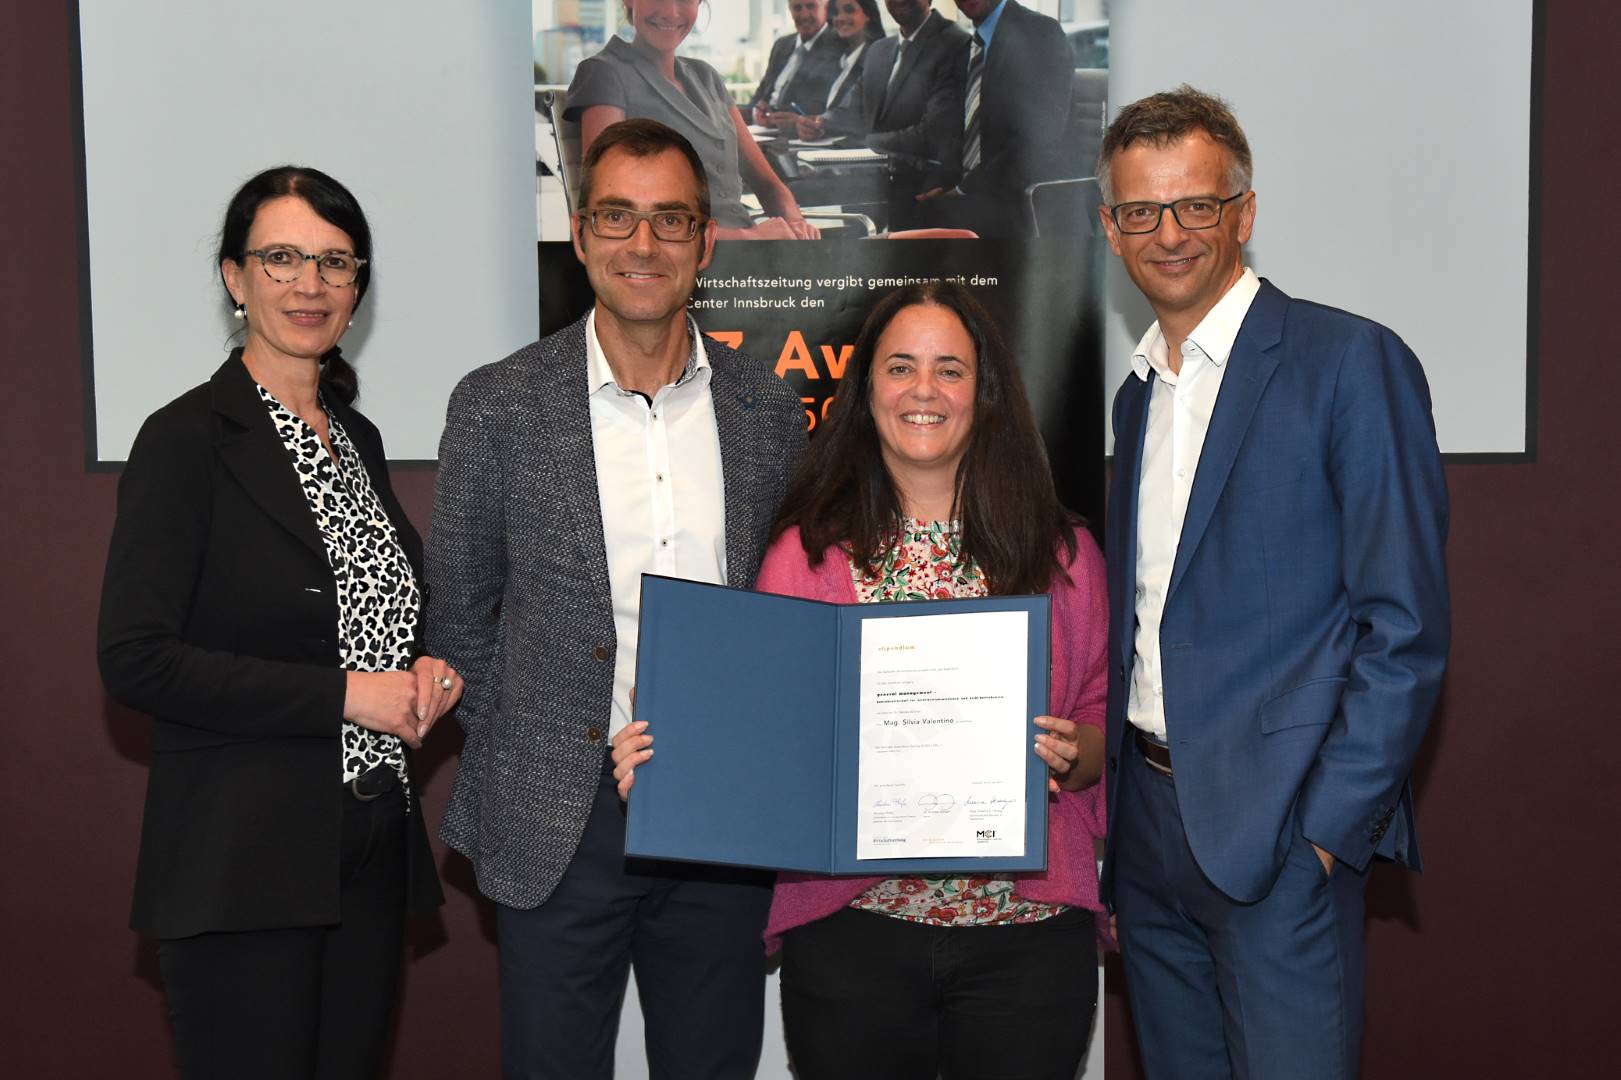 SWZ Award 2019. From left: Susanne E. Herzog, Christian Pfeifer, winner Silvia Valentino, Kurt Matzler. Photo: MCI